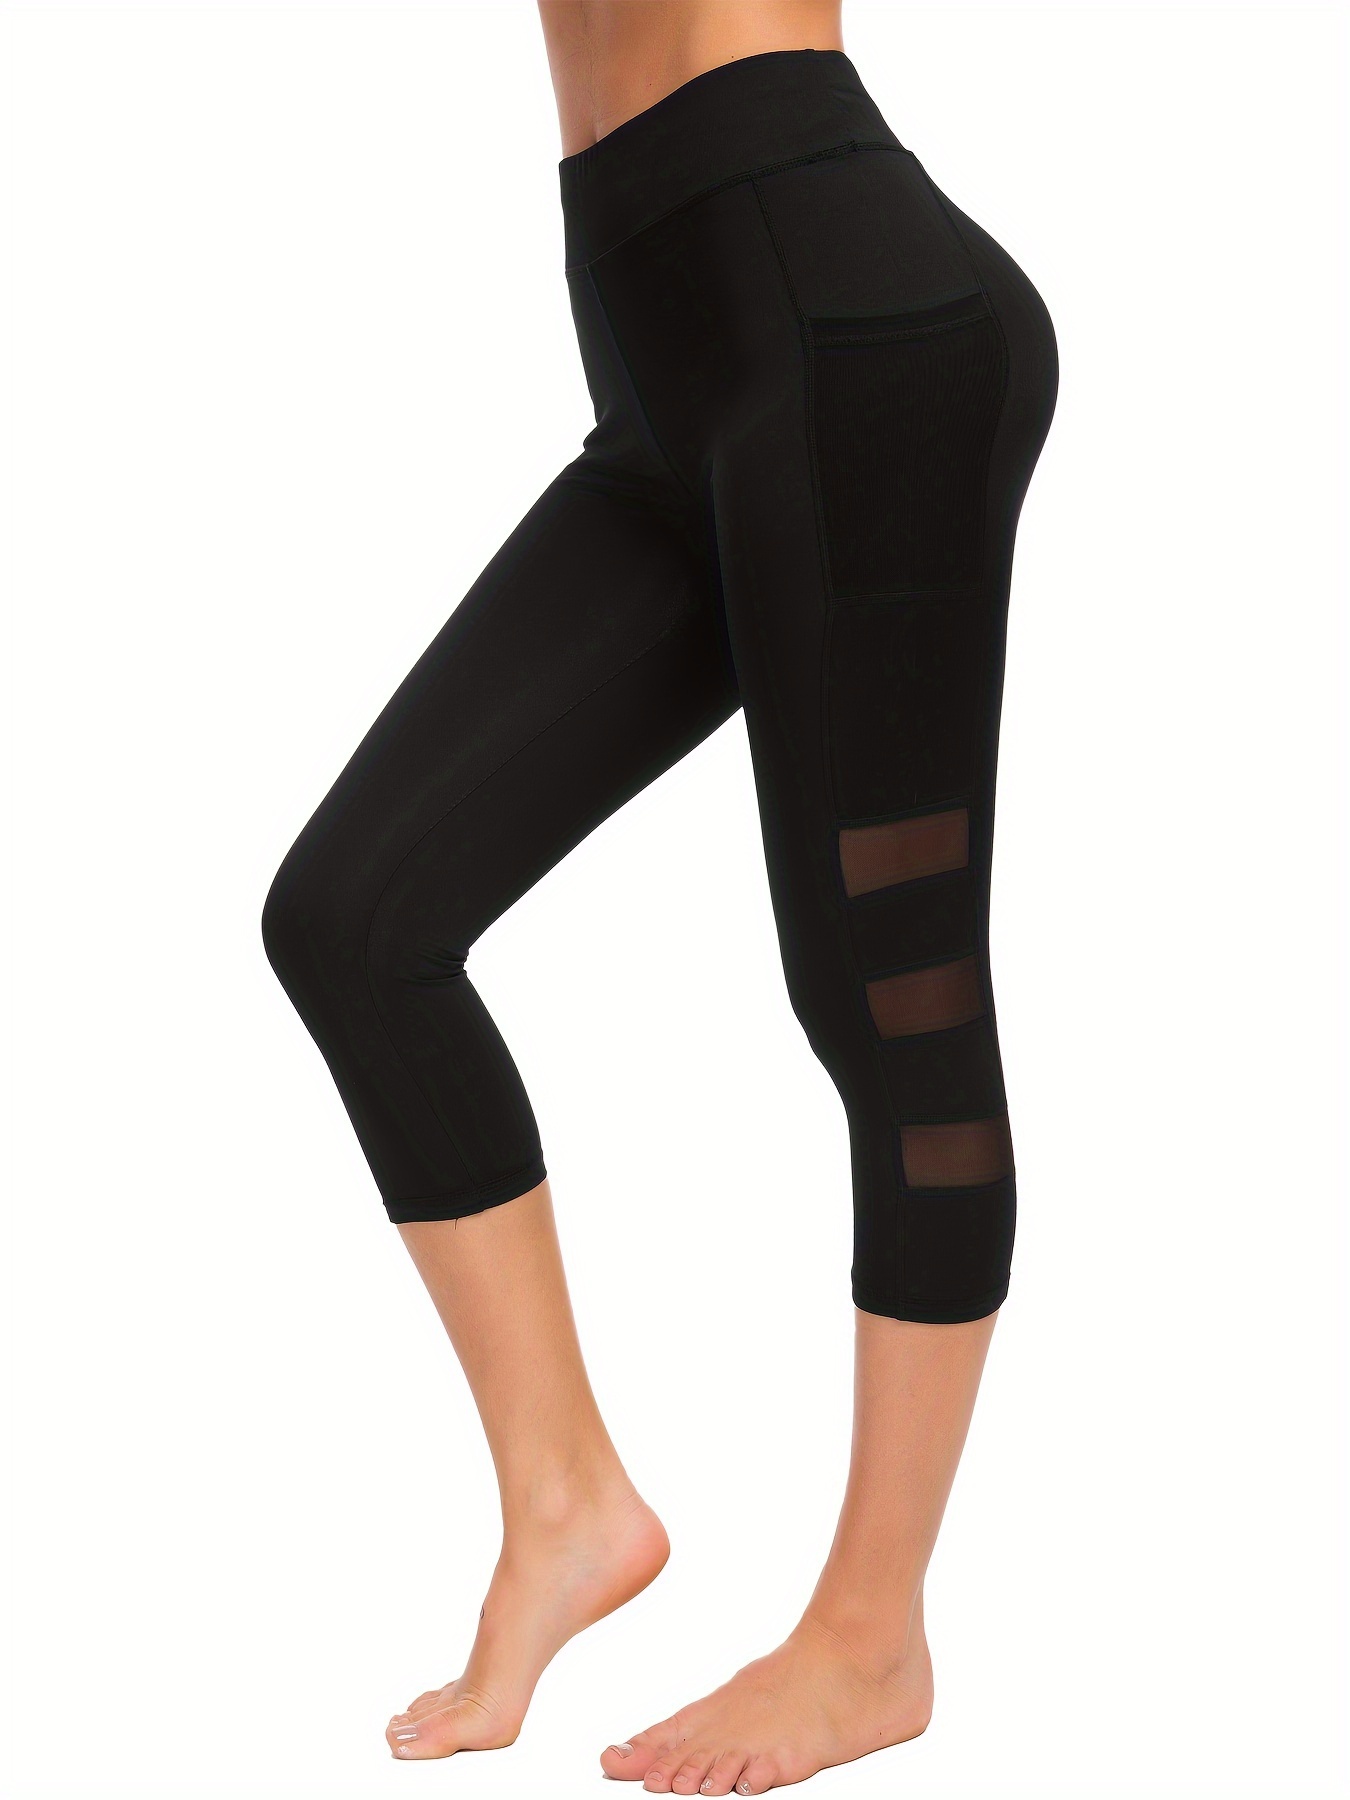 mesh contrast breathable sports yoga capri leggings high waist stretch workout running capri pants womens activewear